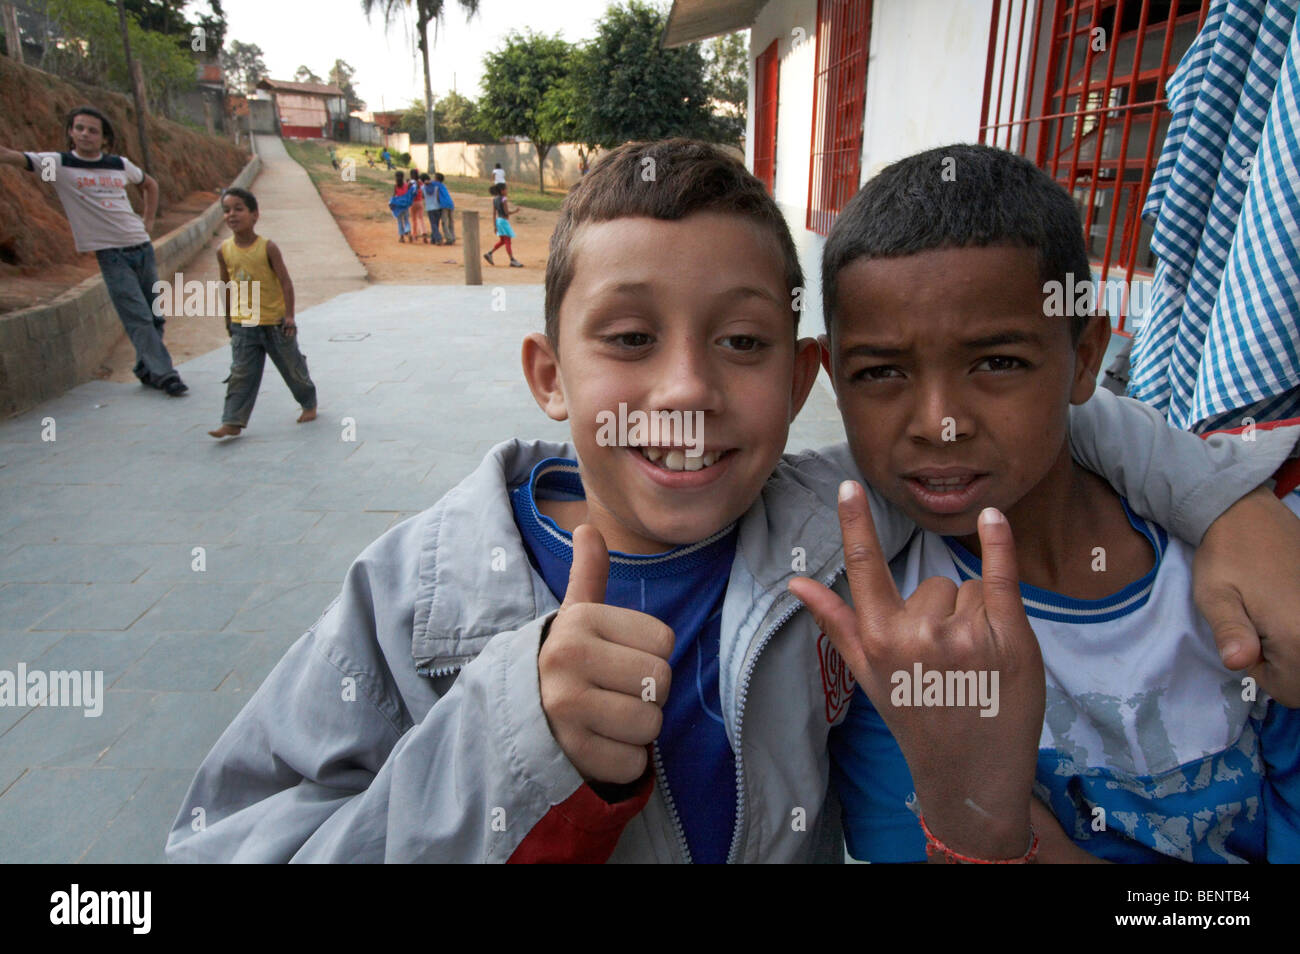 BRAZIL Slum dwelling children in an after school care center, Sao Paulo. Stock Photo